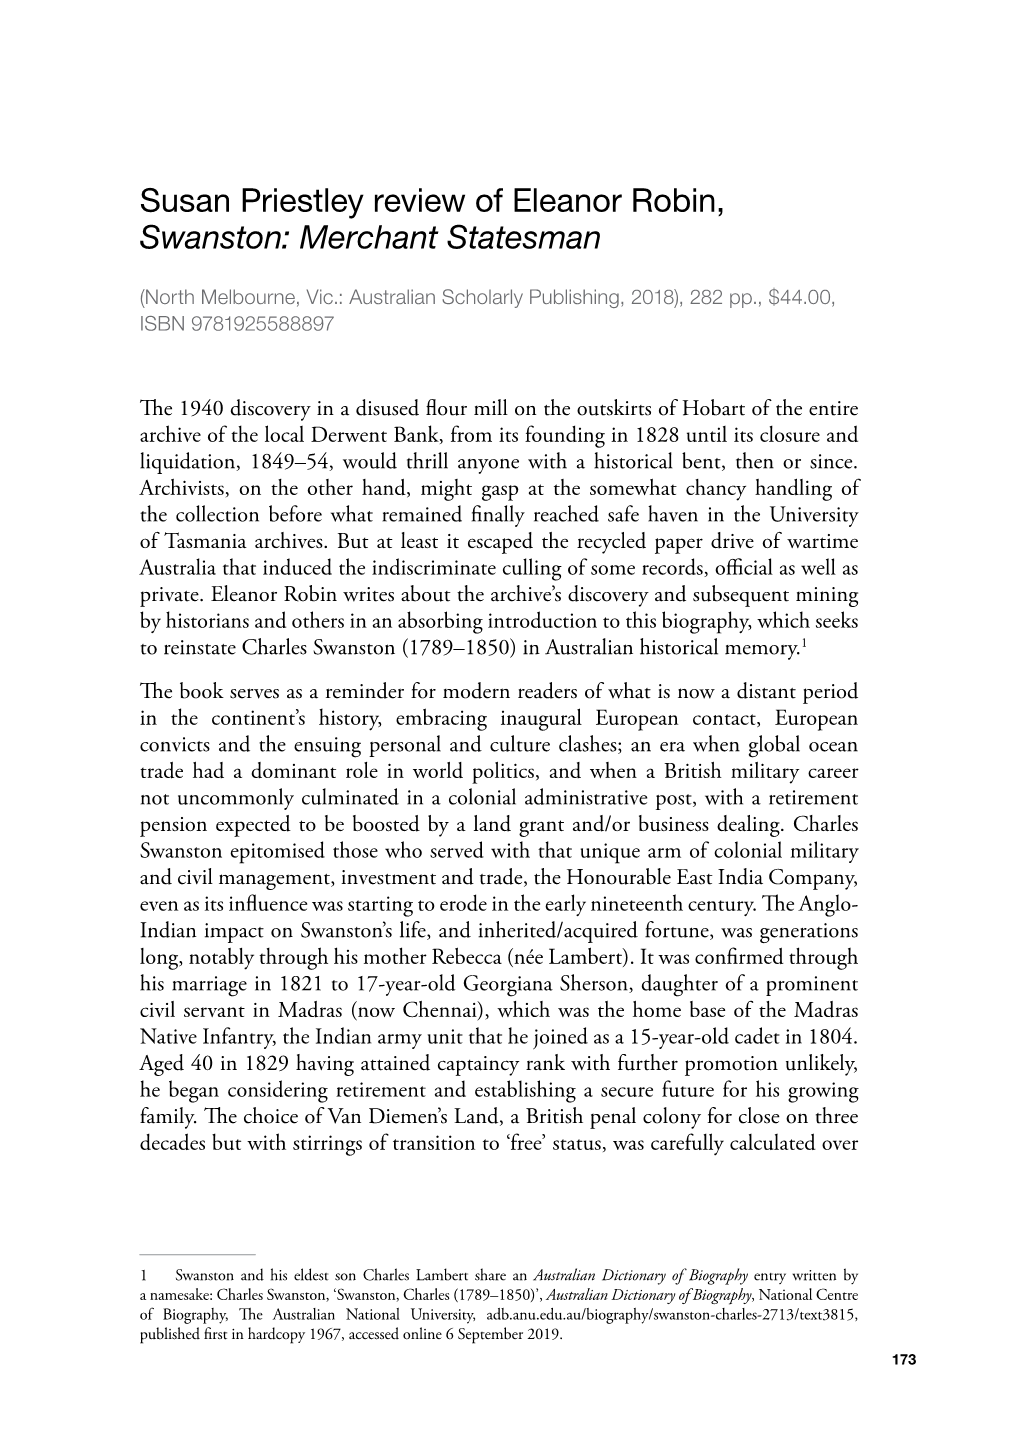 Susan Priestley Review of Eleanor Robin, Swanston: Merchant Statesman